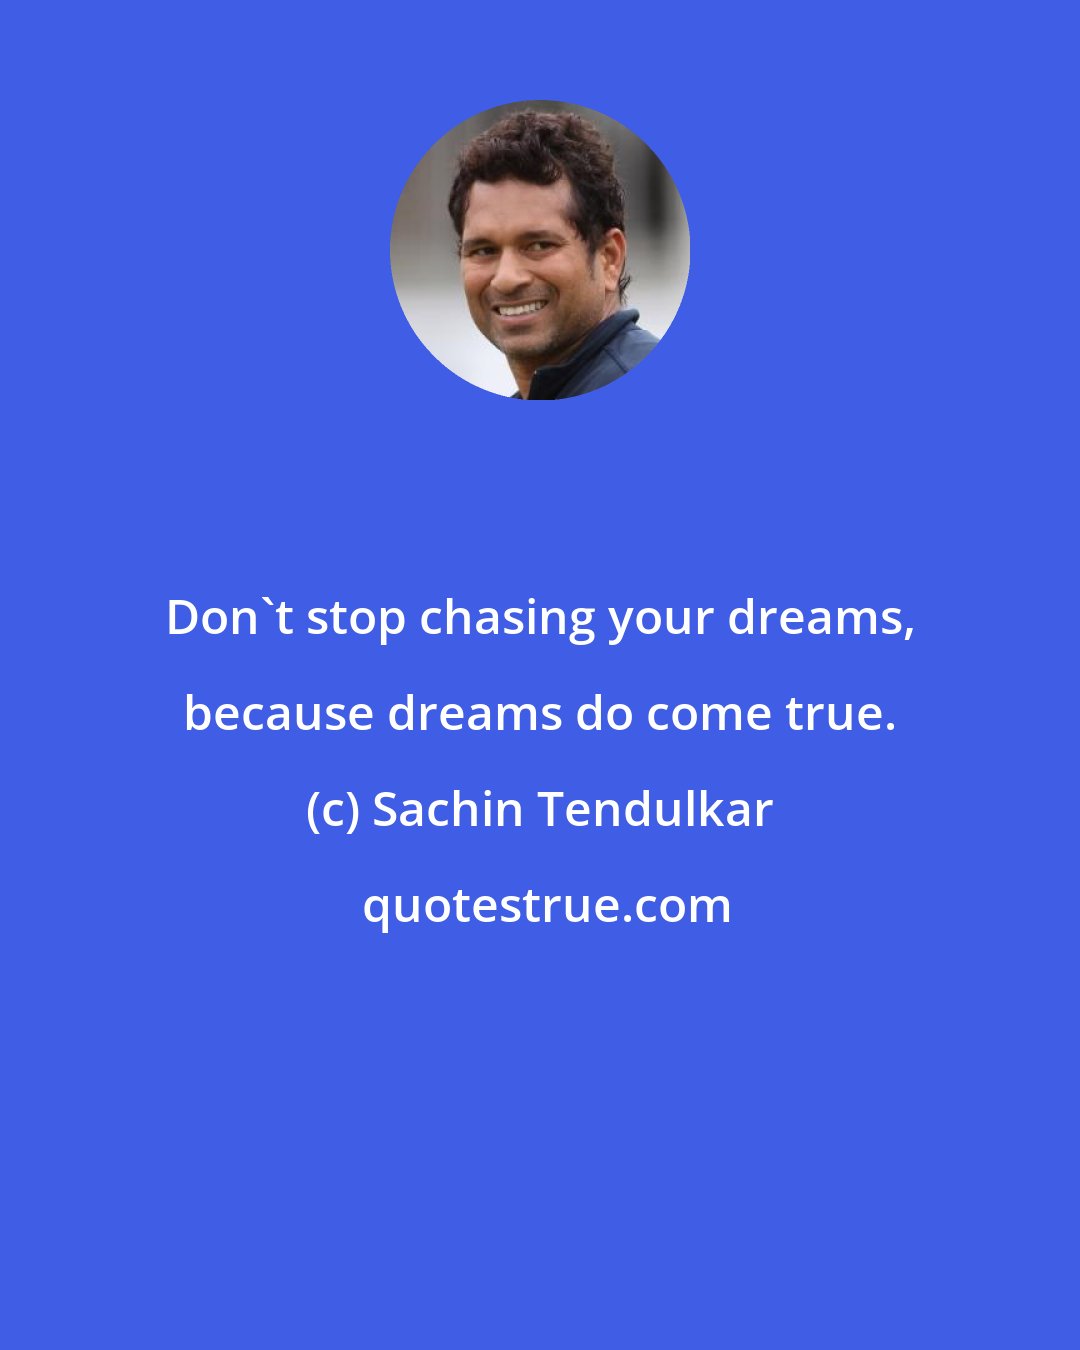 Sachin Tendulkar: Don't stop chasing your dreams, because dreams do come true.